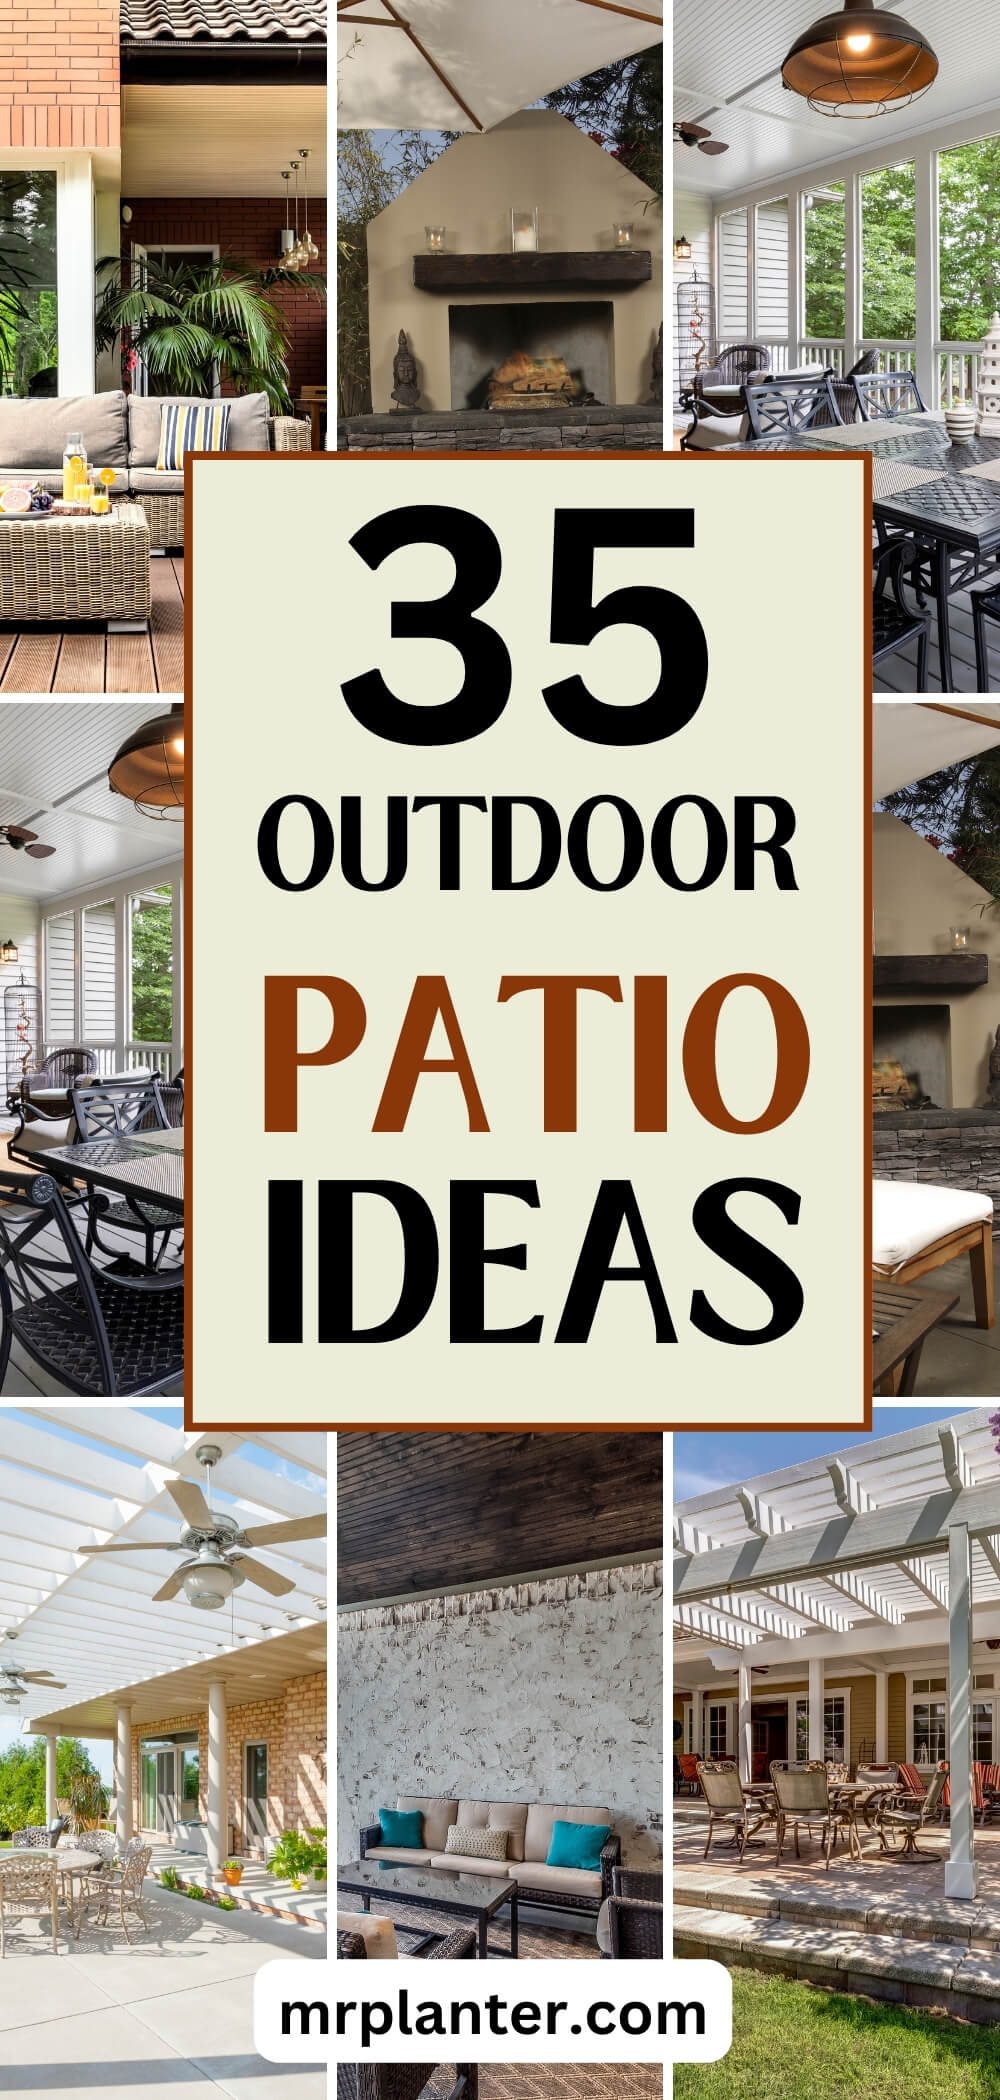 35 Outdoor Patio Ideas for a Relaxing Backyard Retreat